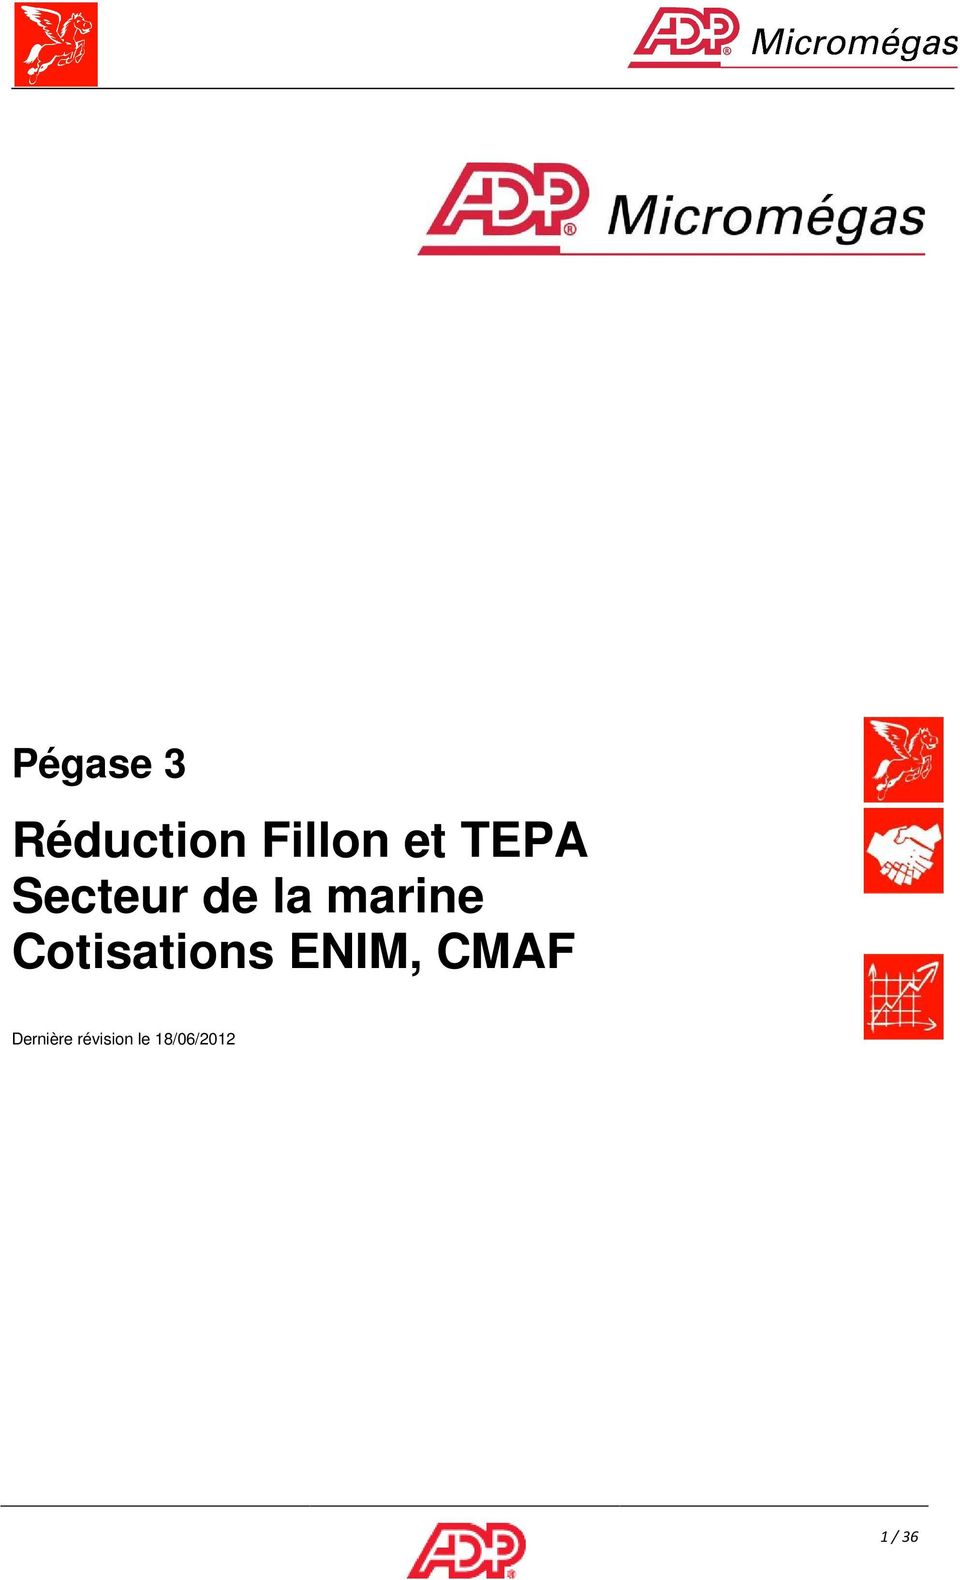 Cotisations ENIM, CMAF